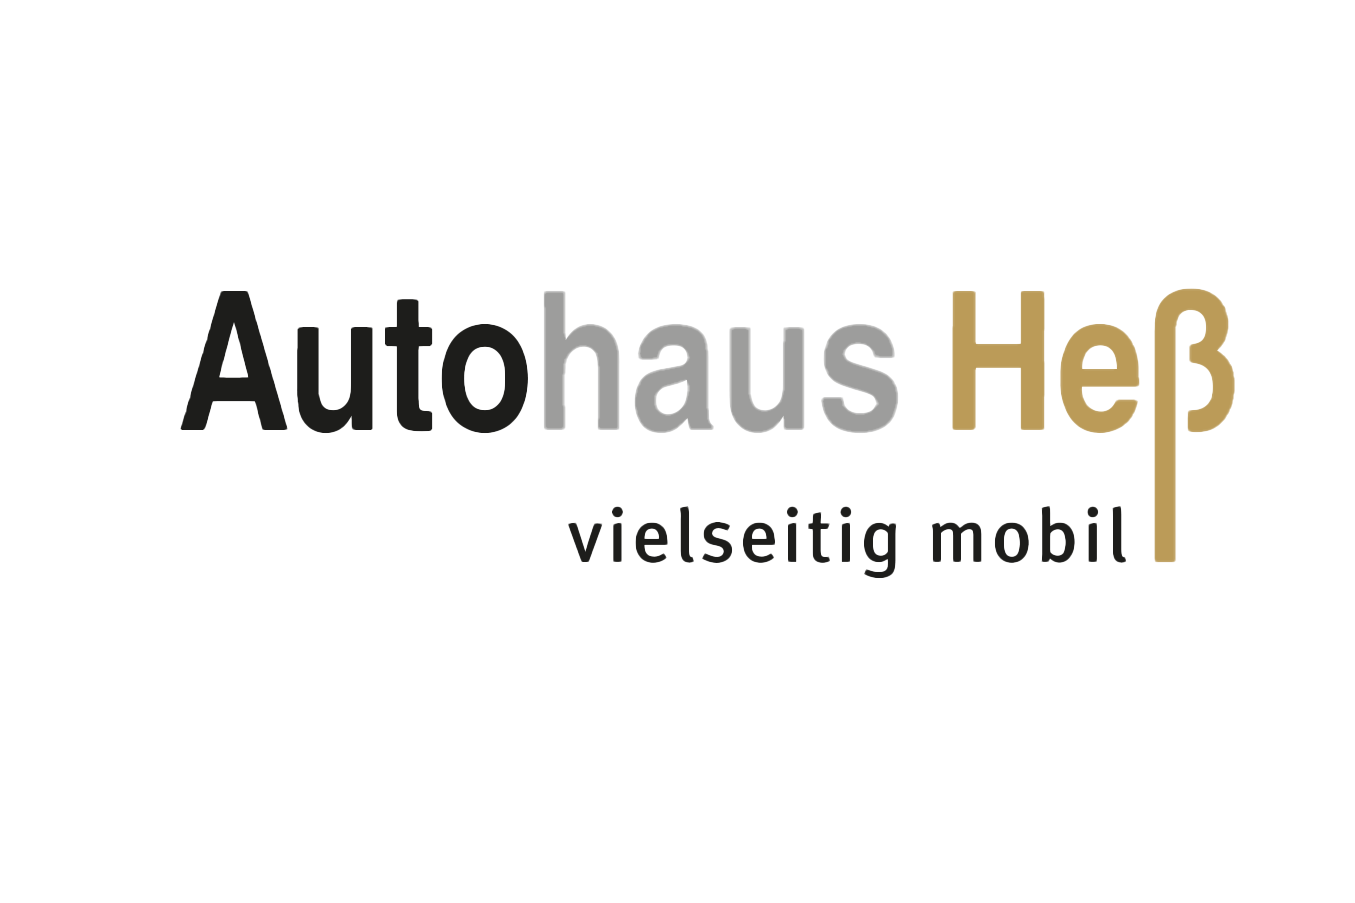 Autohaus Heß GmbH - vielseitig mobil logo